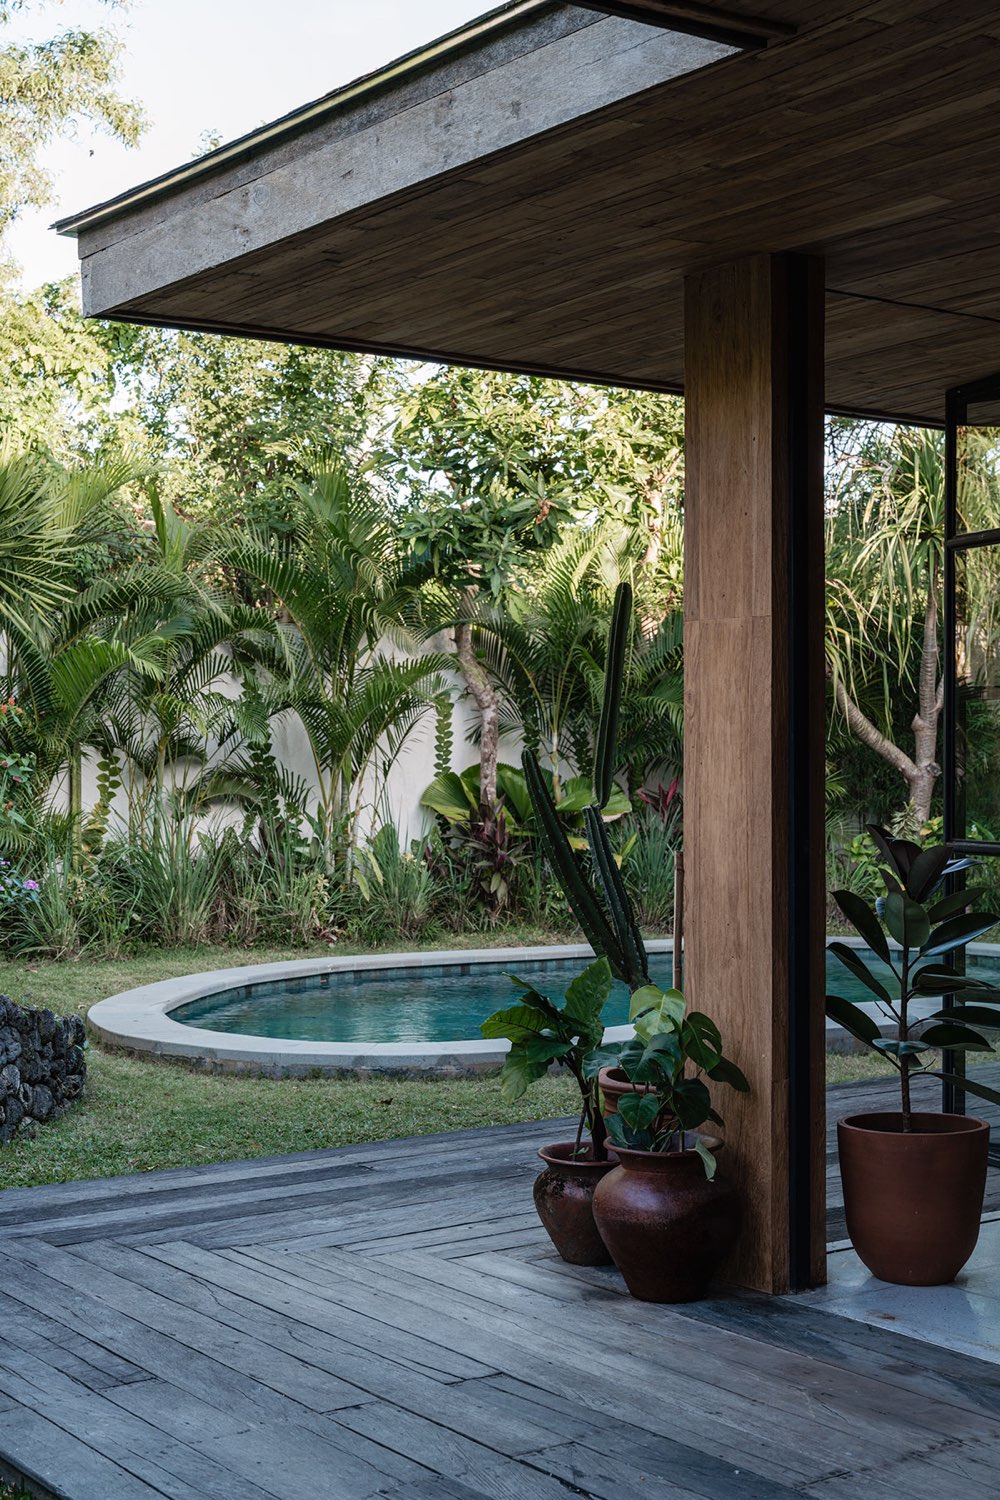 visite deco maison ouverte jardin nature jardin tropical terrasse en bois piscine